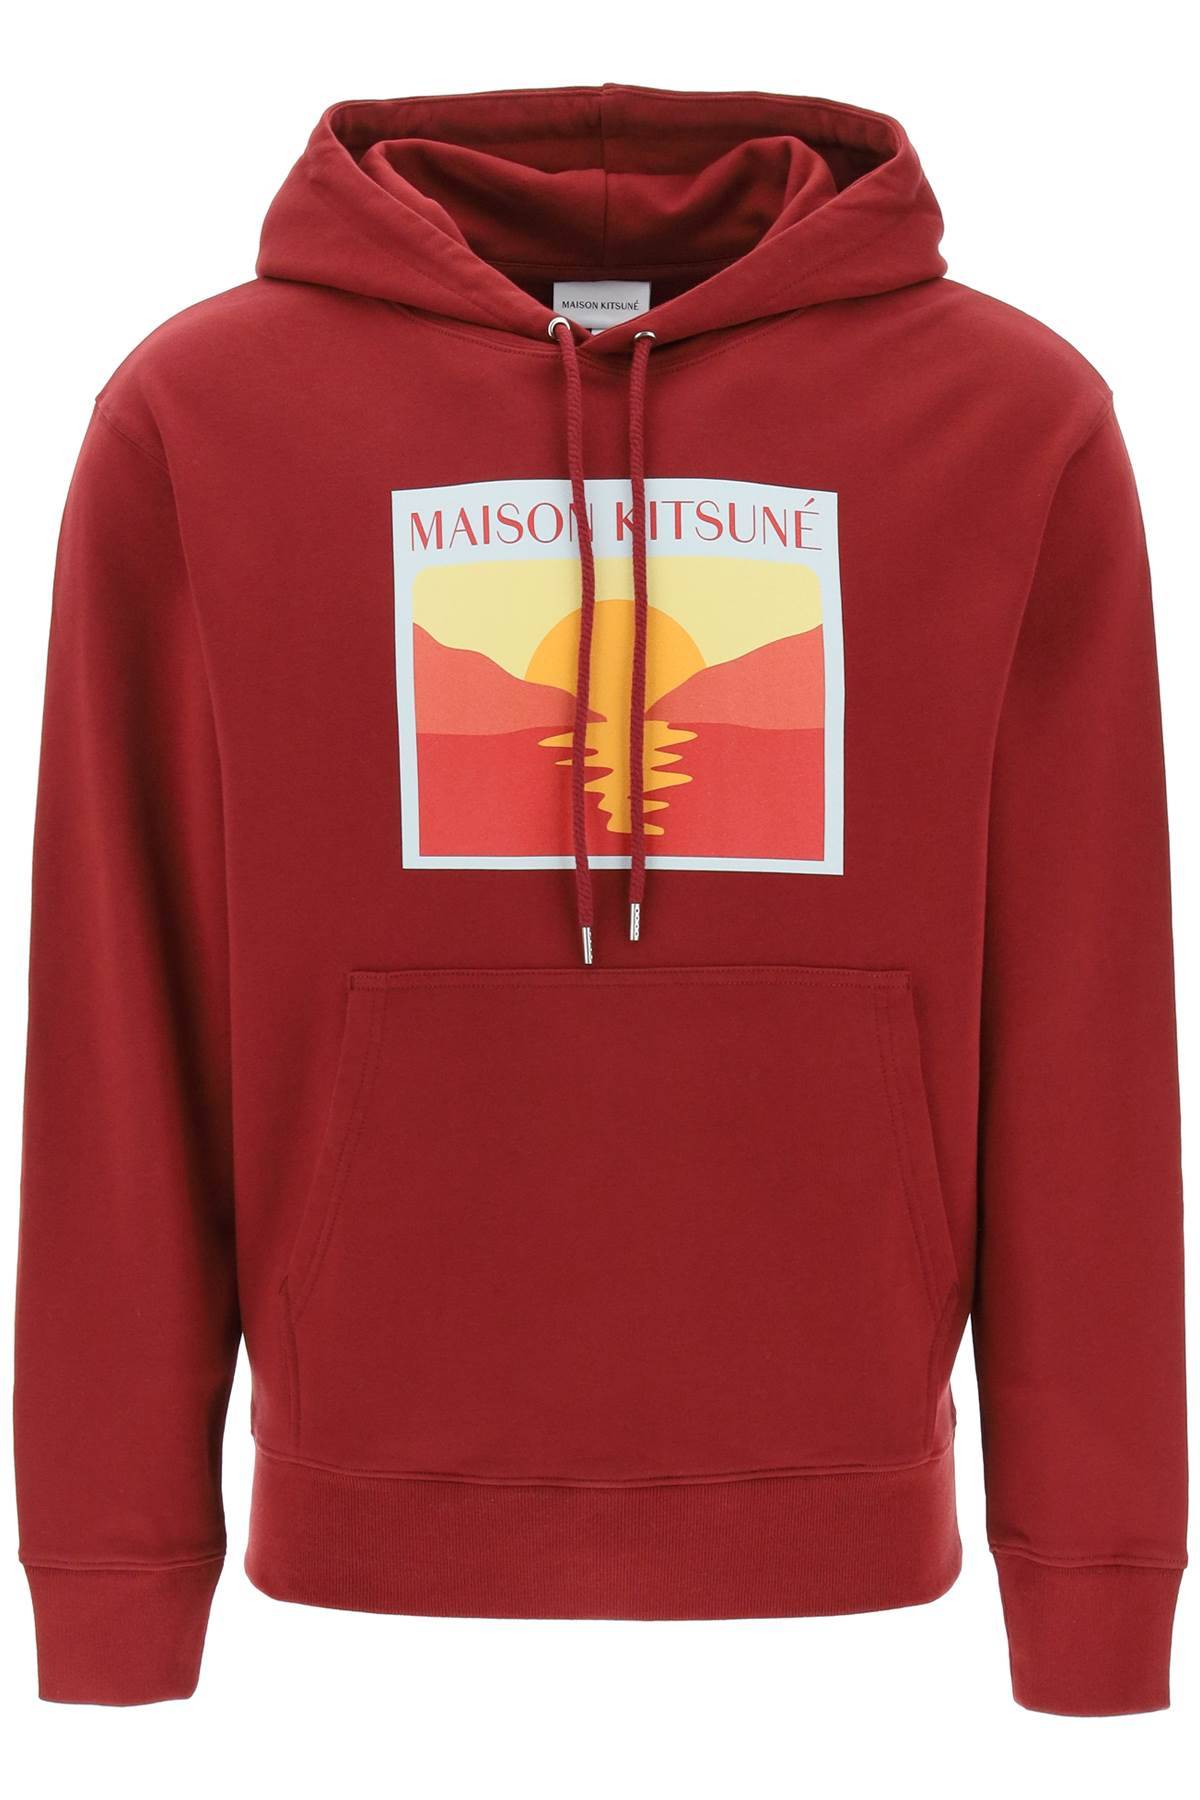 Maison Kitsuné MAISON KITSUNE hooded sweatshirt with graphic print